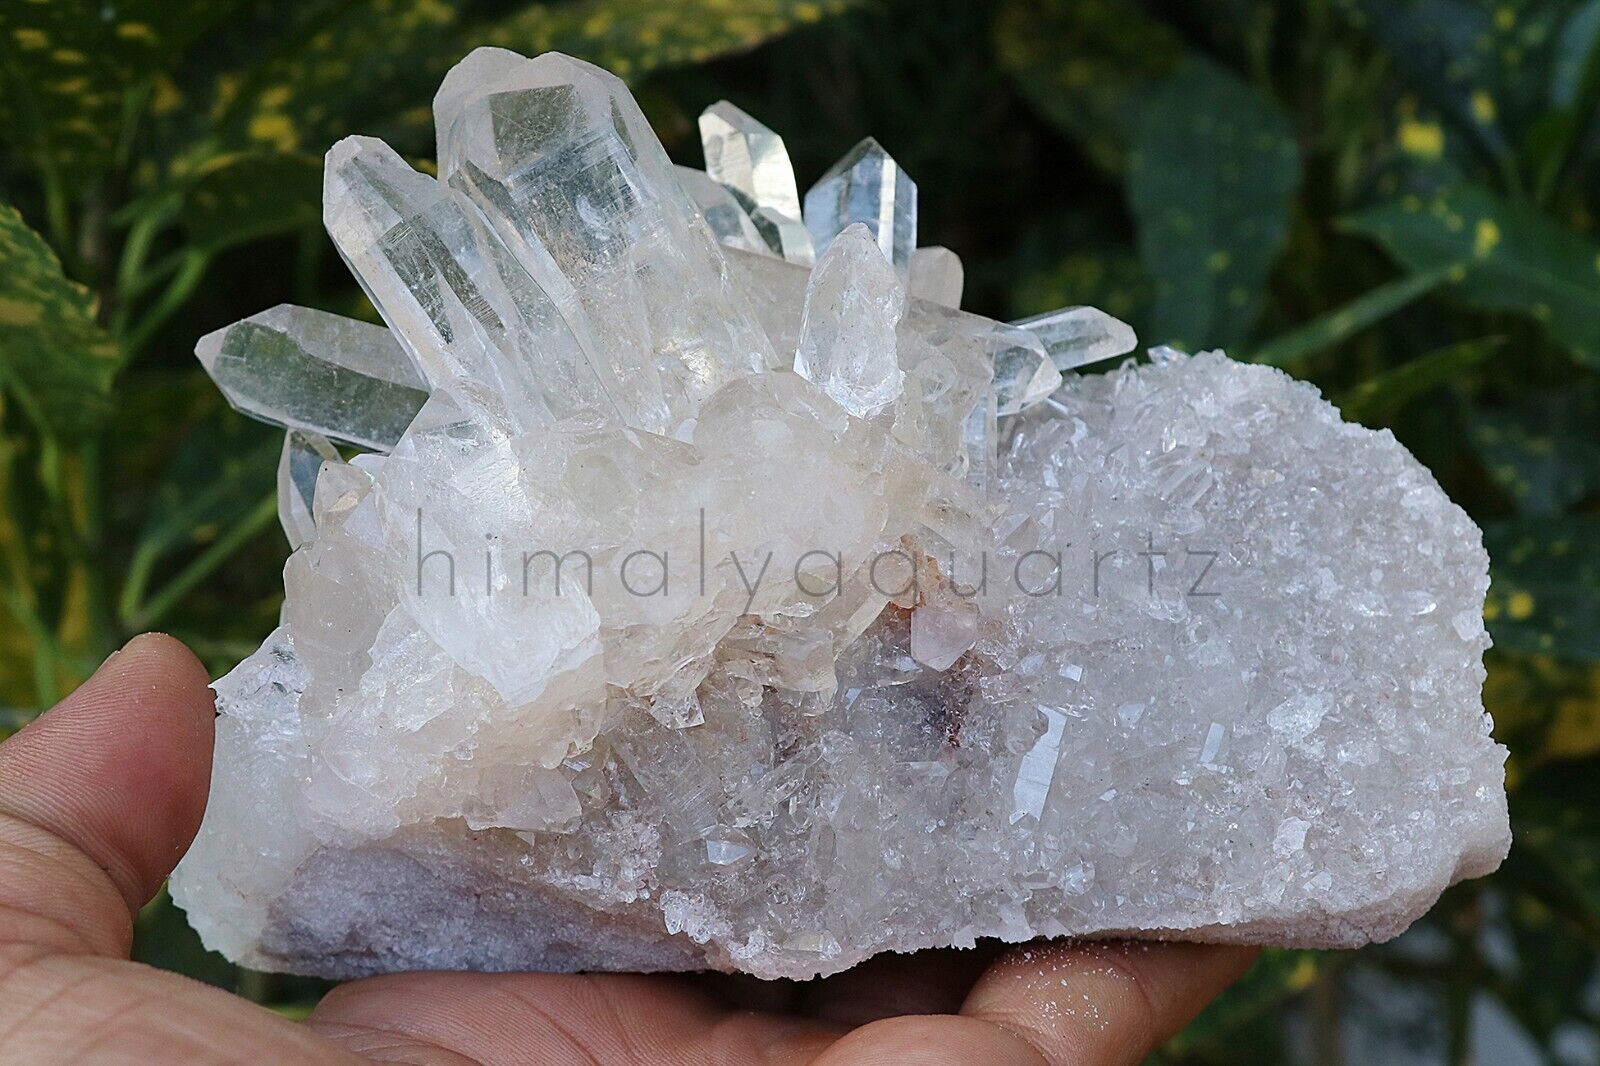 945 gm Rare Natural Himalayan White Samadhi Quartz Crystal Cluster Raw Specimen